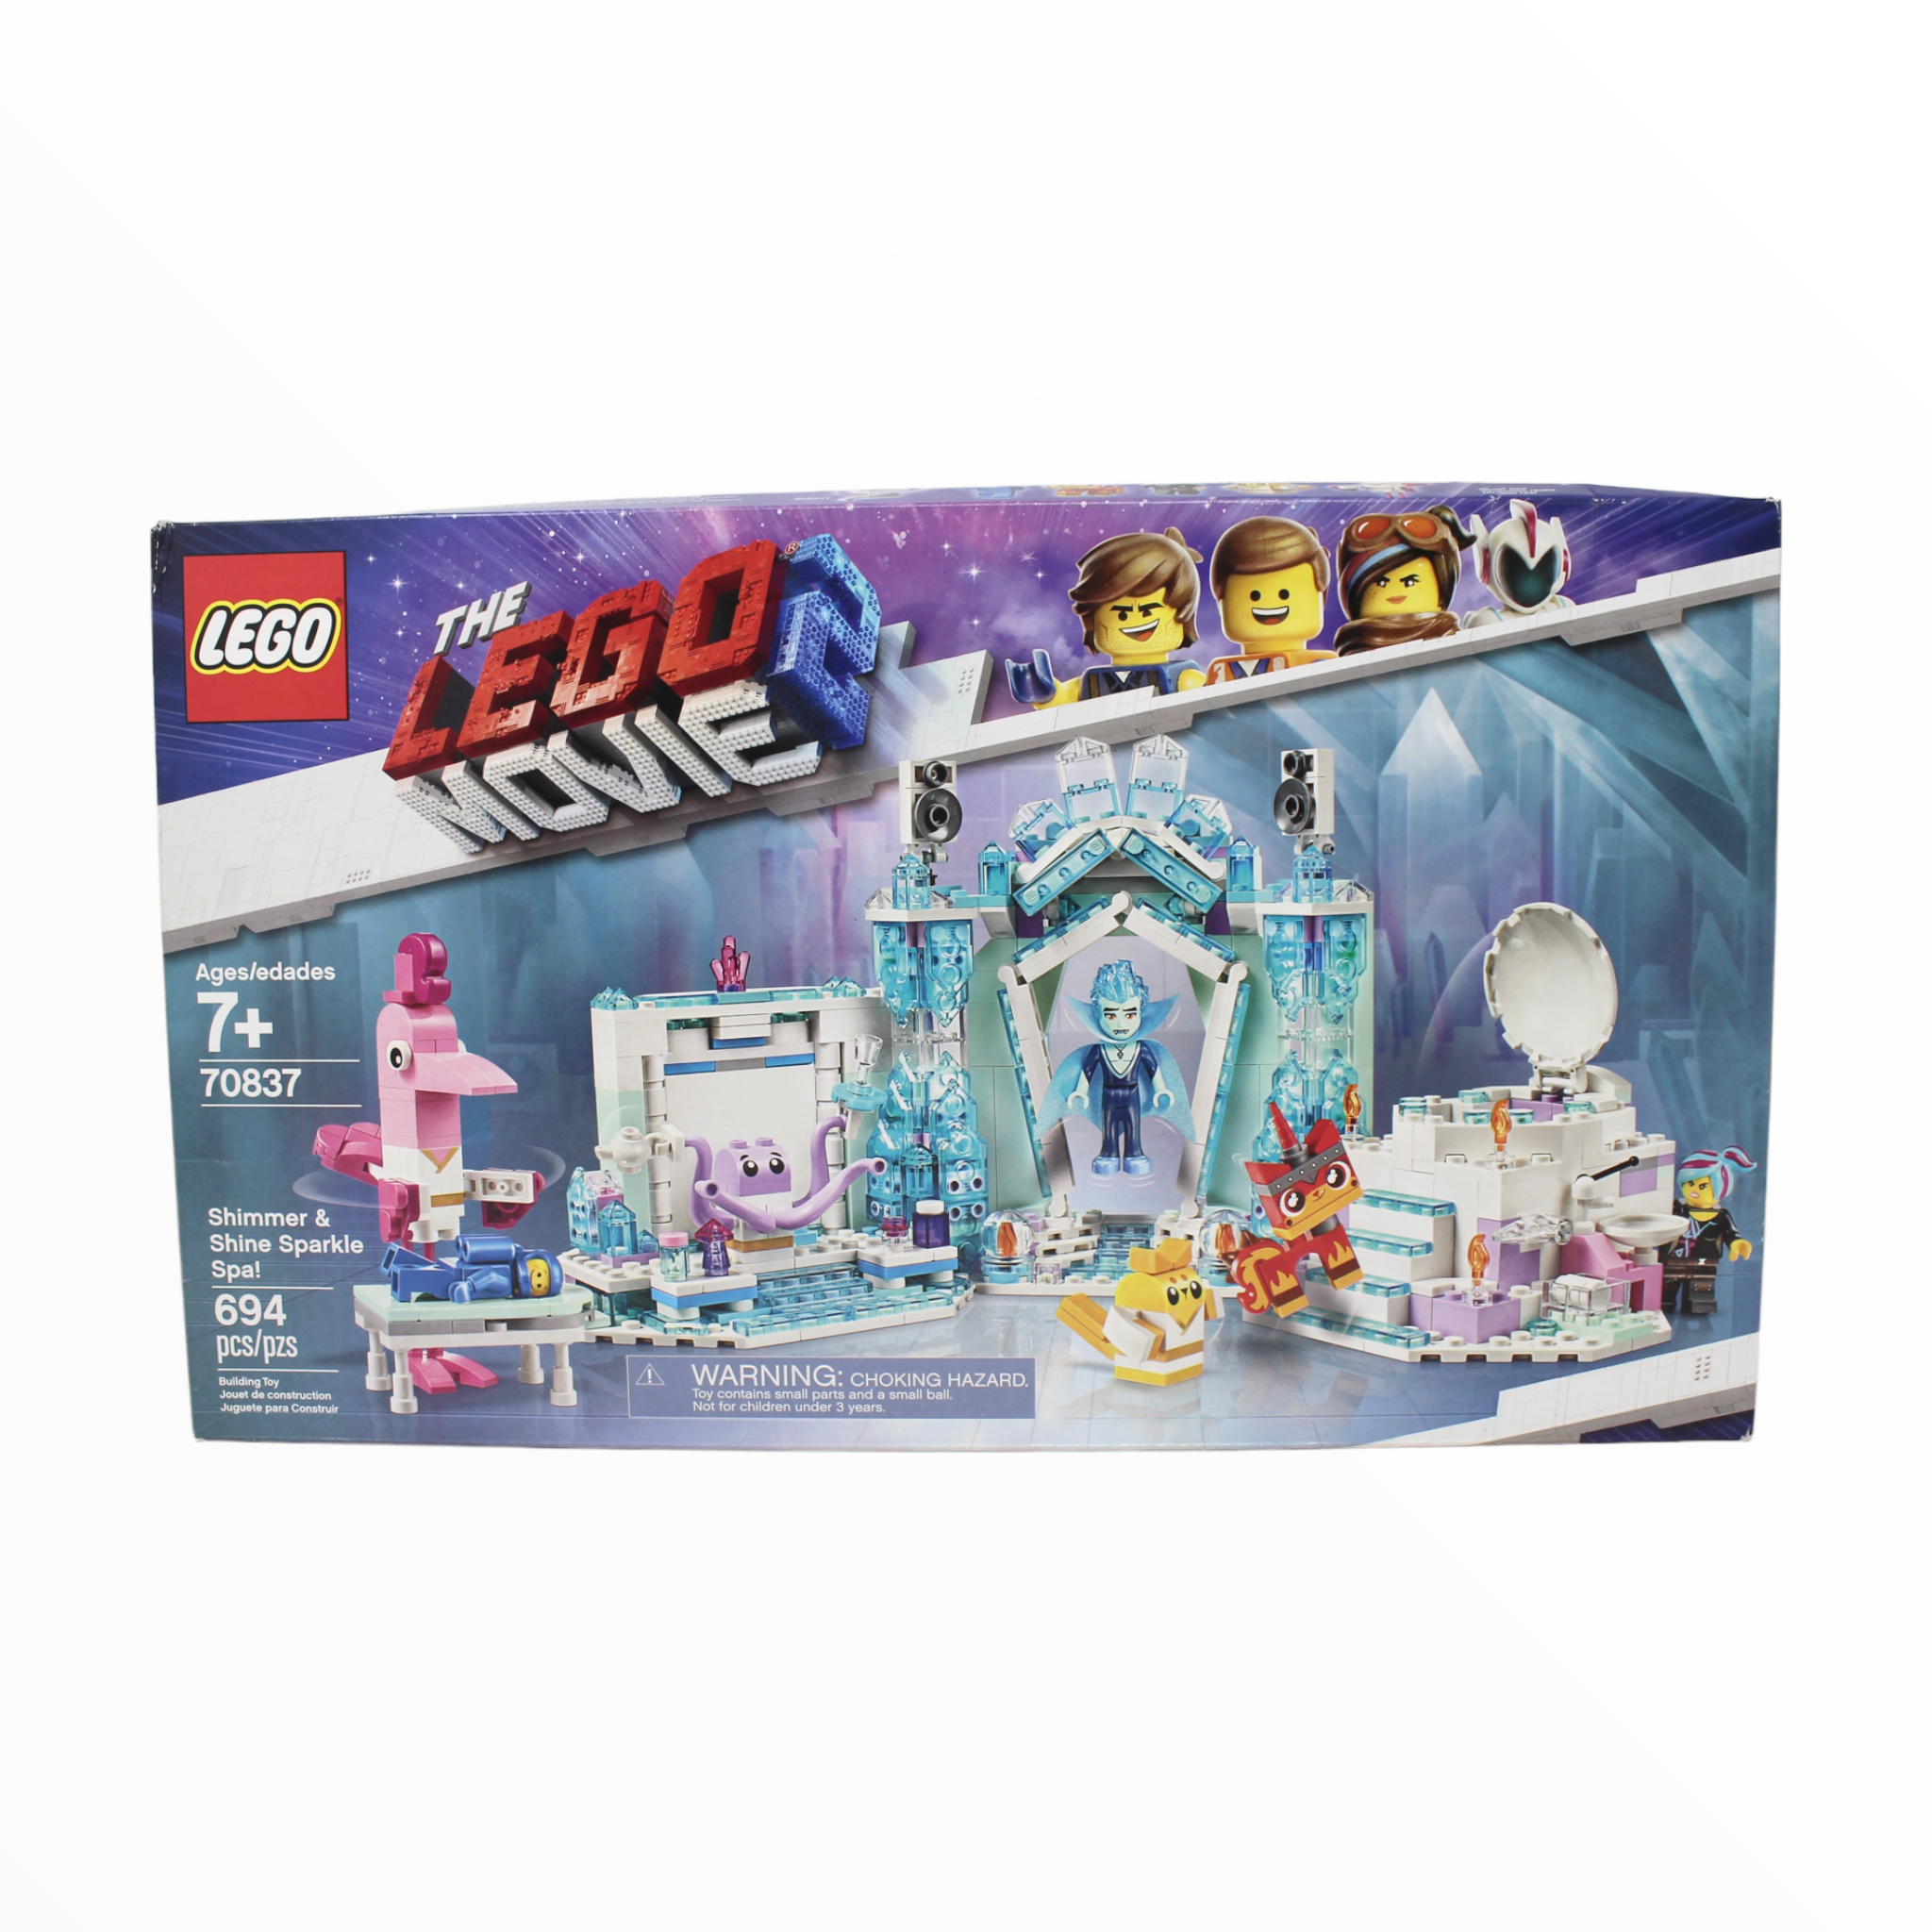 Retired Set 70837 The LEGO Movie 2 Shimmer & Shine Sparkle Spa!